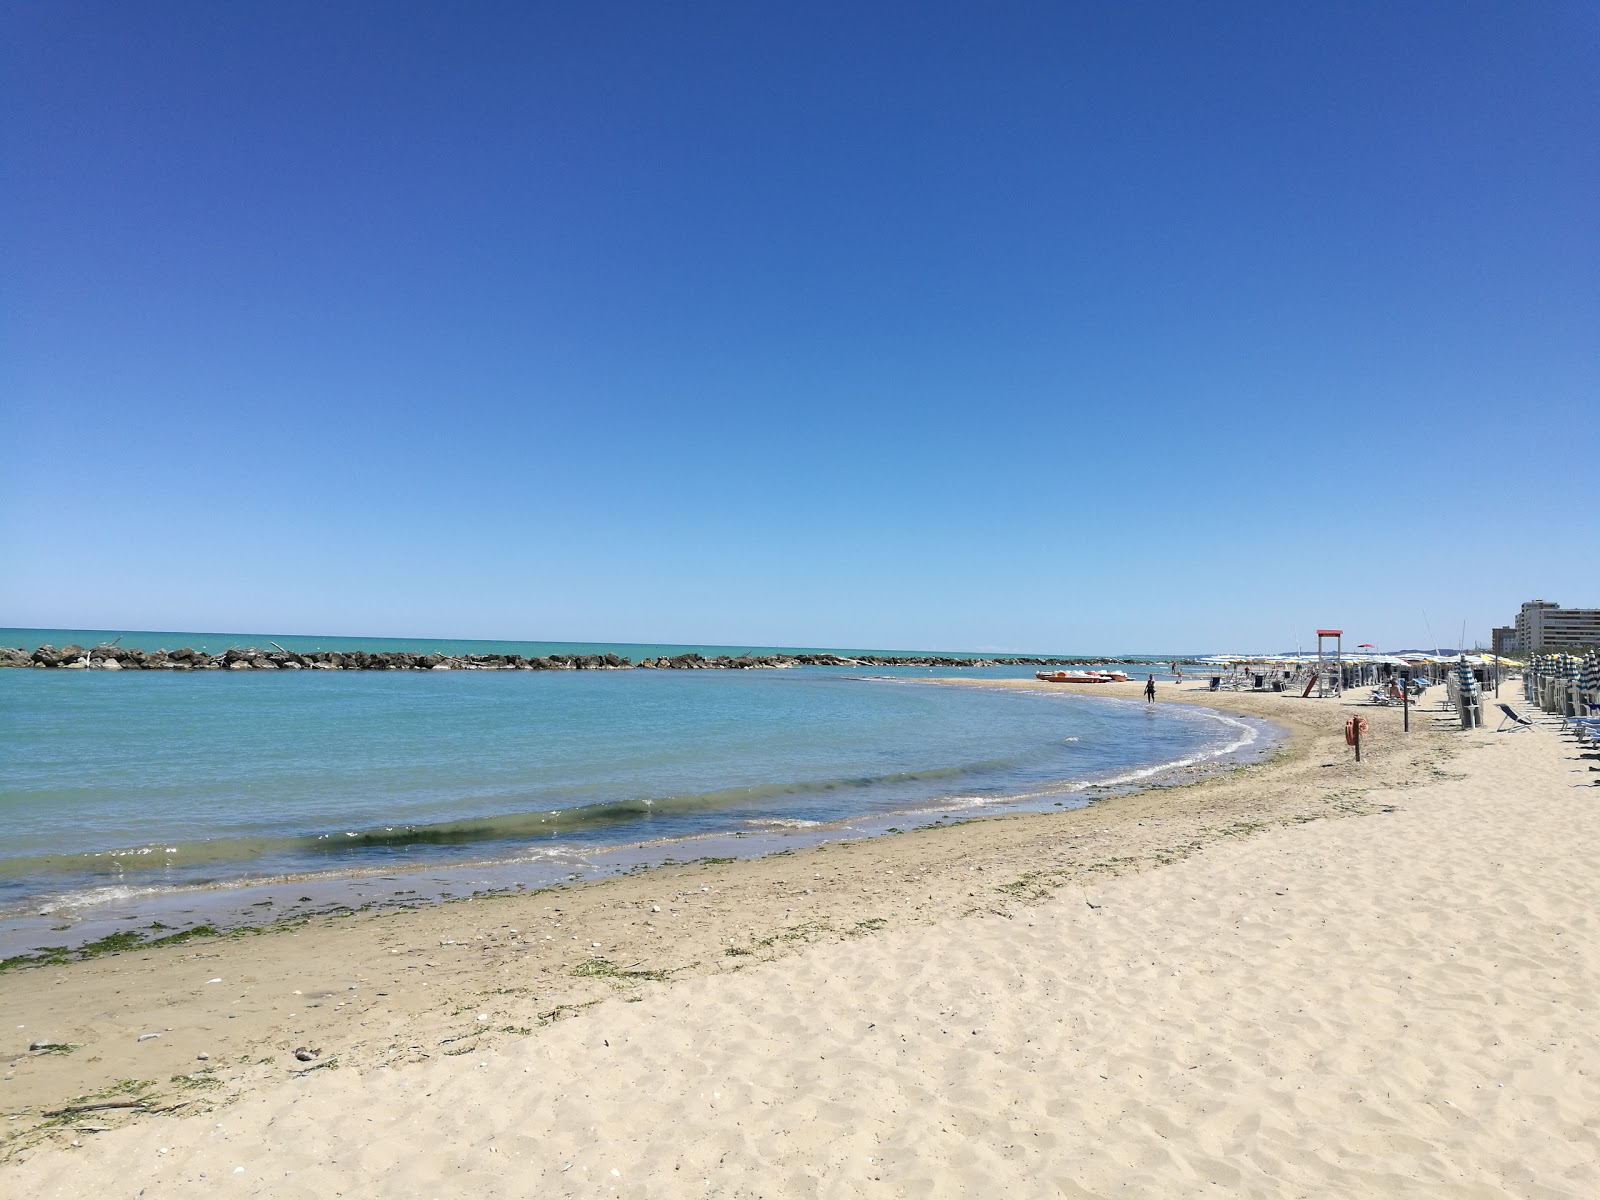 Foto af Spiaggia Montesilvano strandferiestedet område